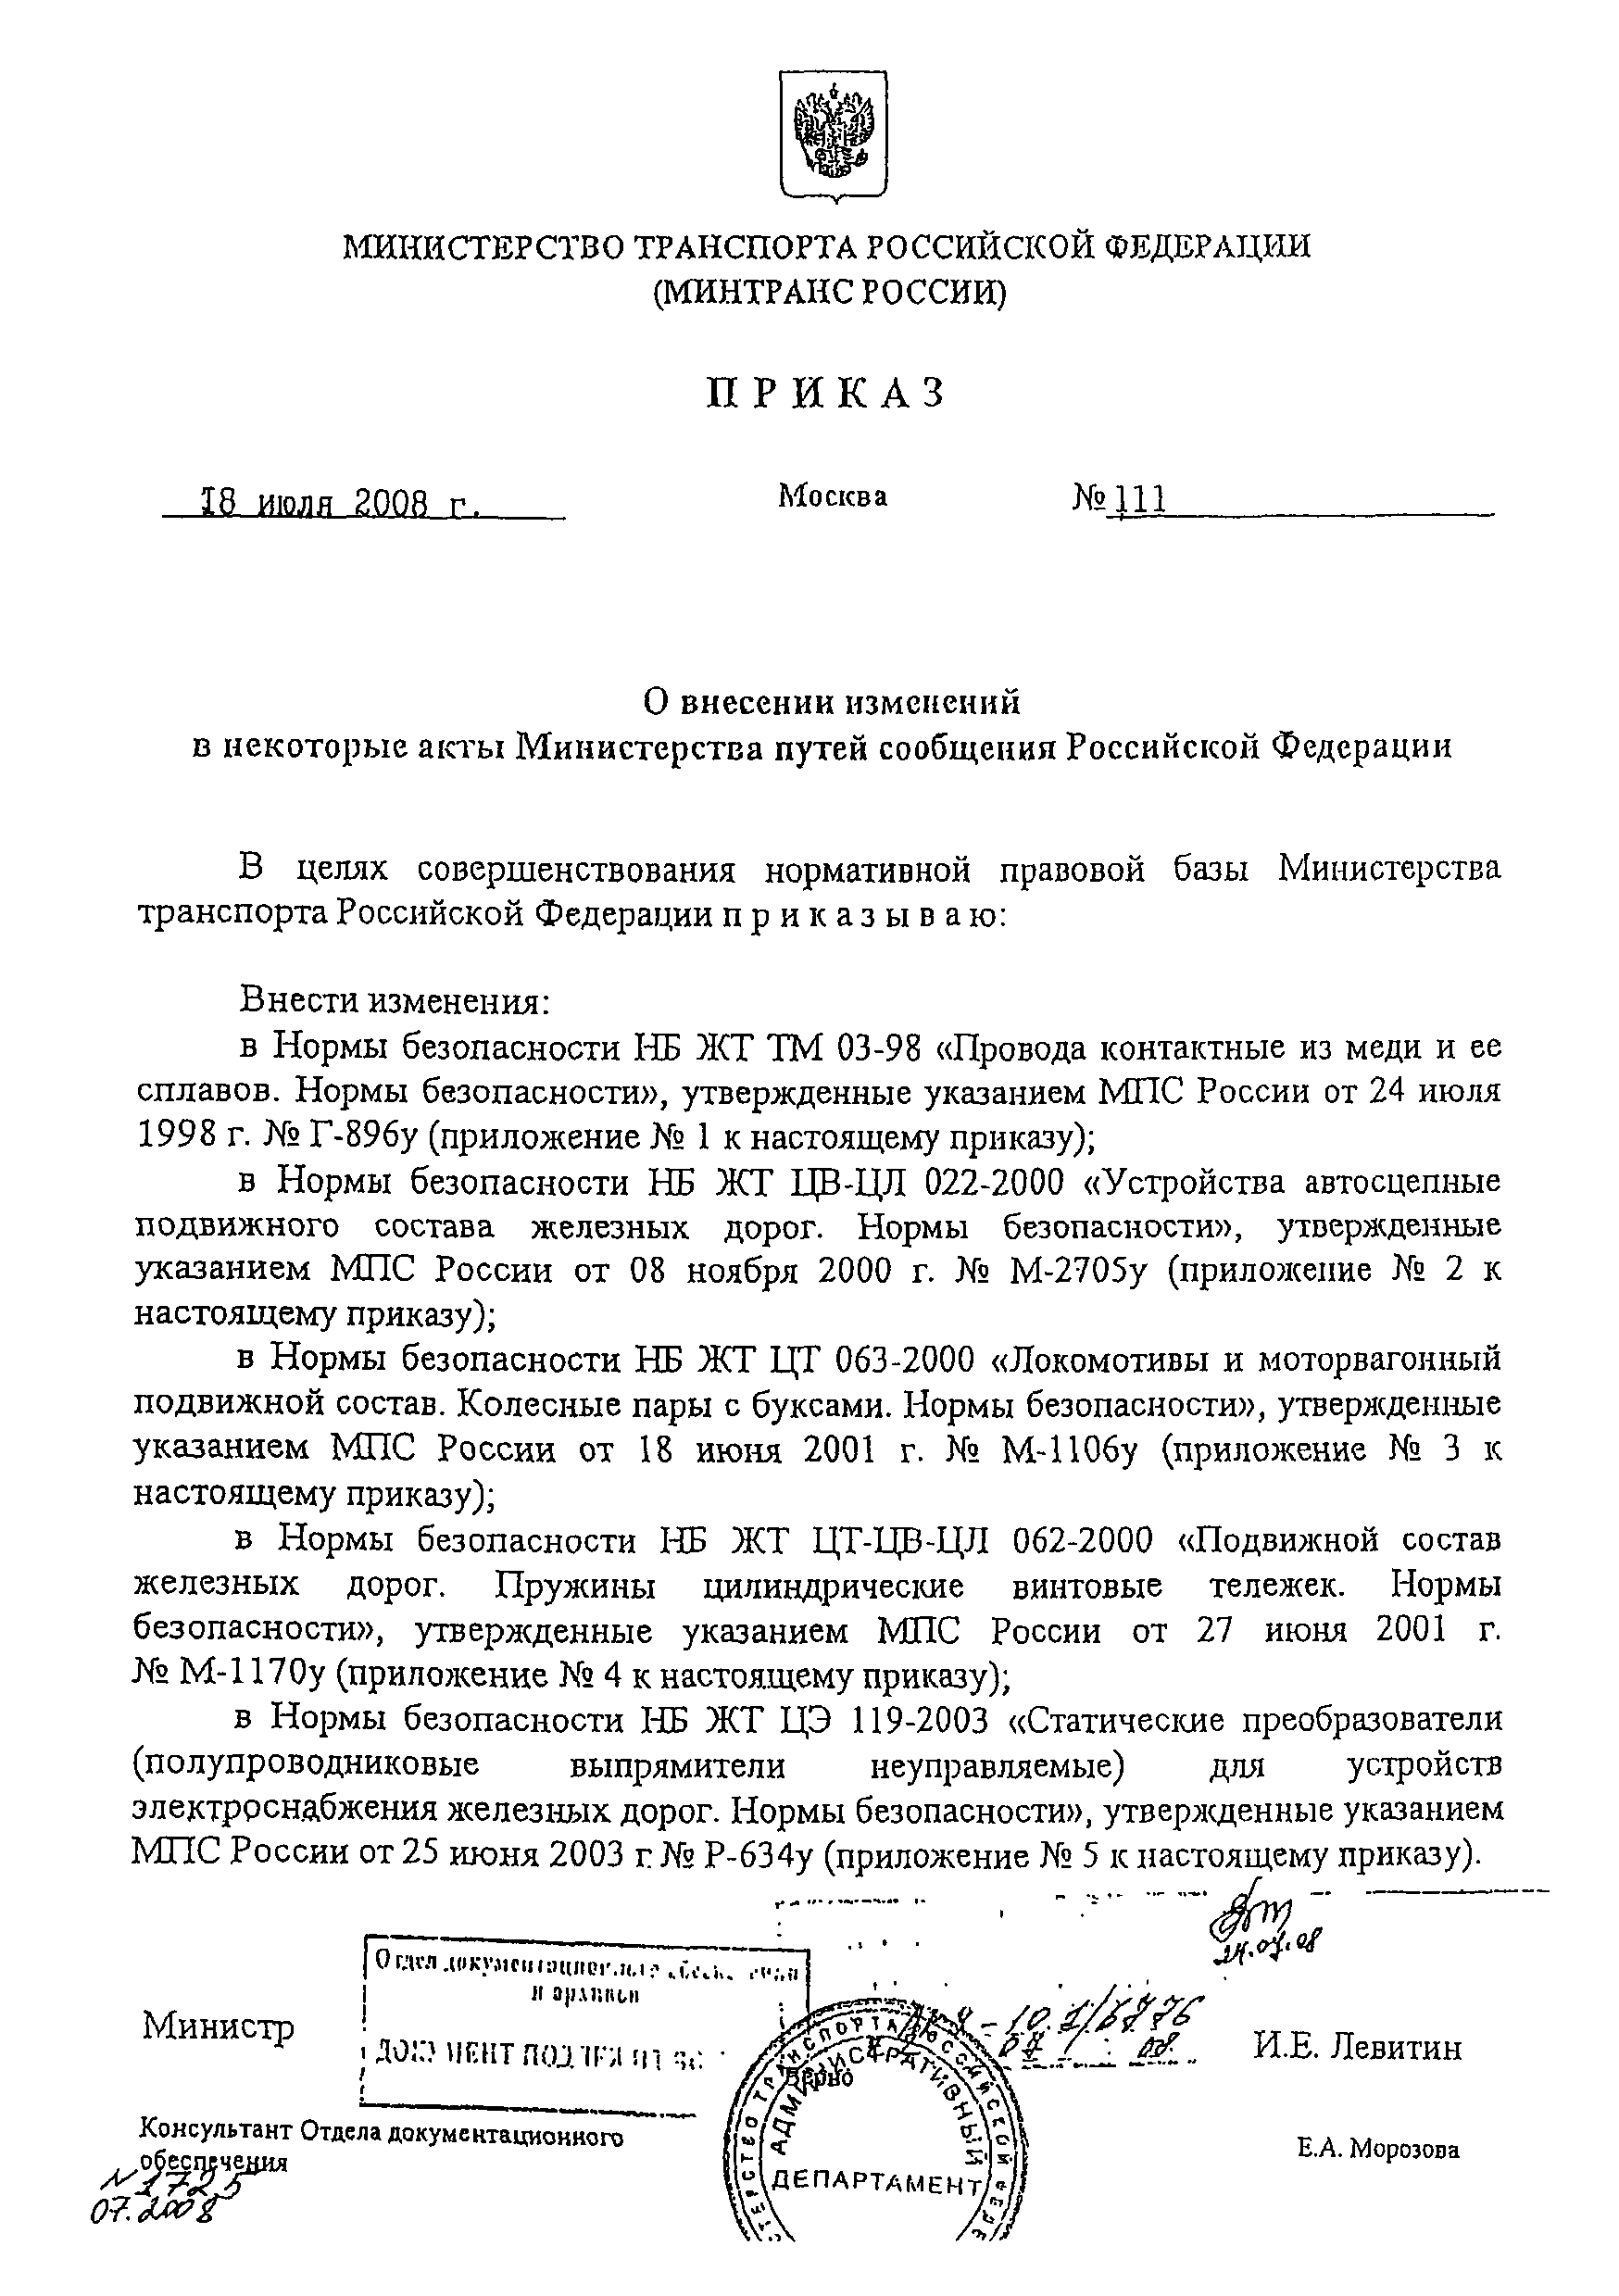 ФТС ЖТ ЦТ-ЦВ-ЦЛ 062-2000